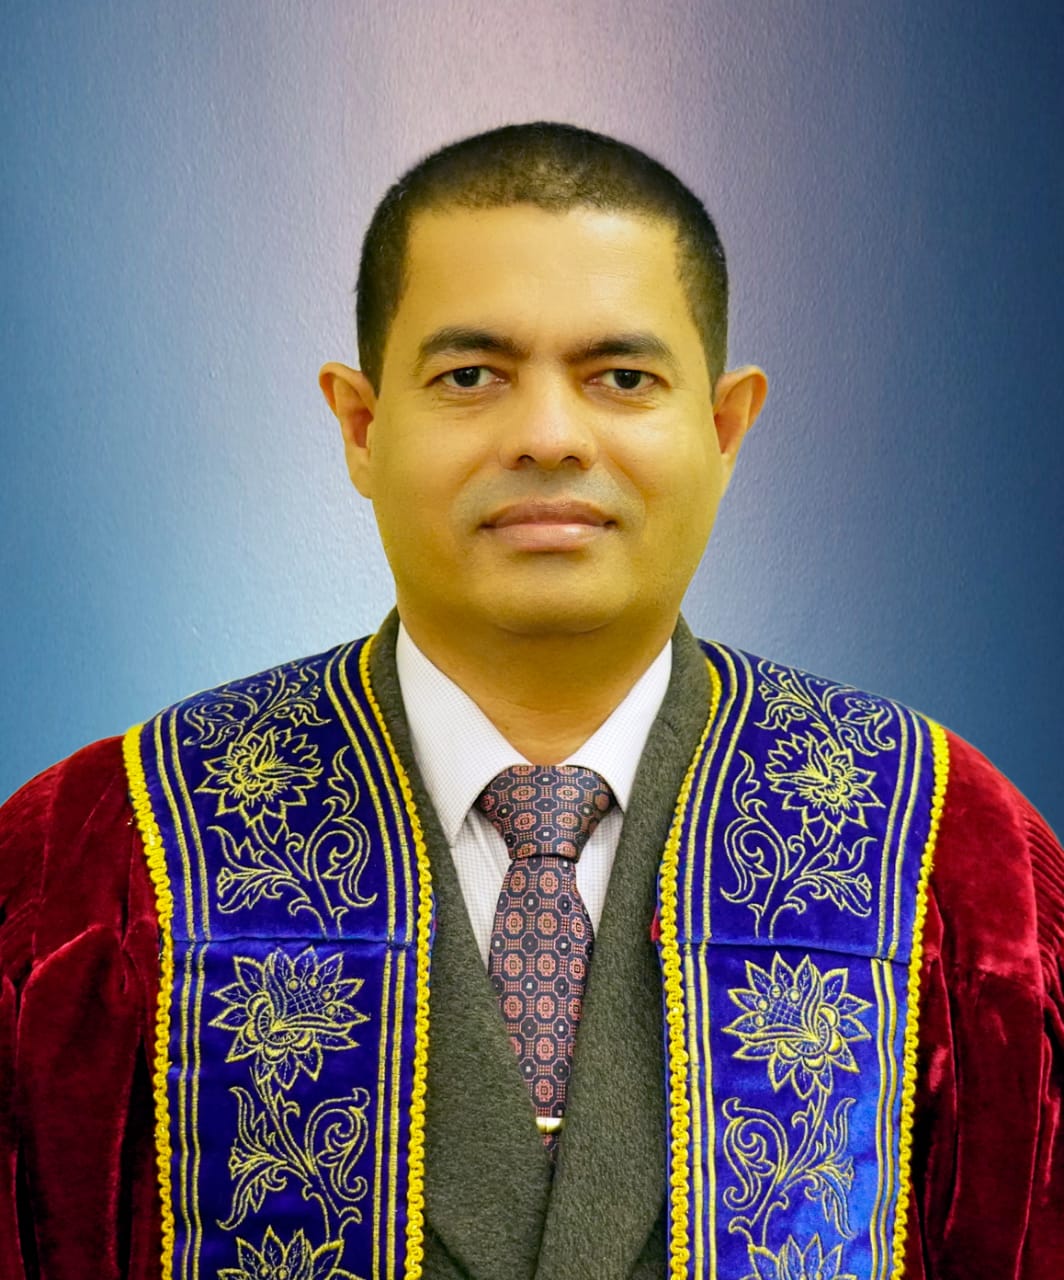 Vice-Chancellor Professor Udaya Rathnayaka